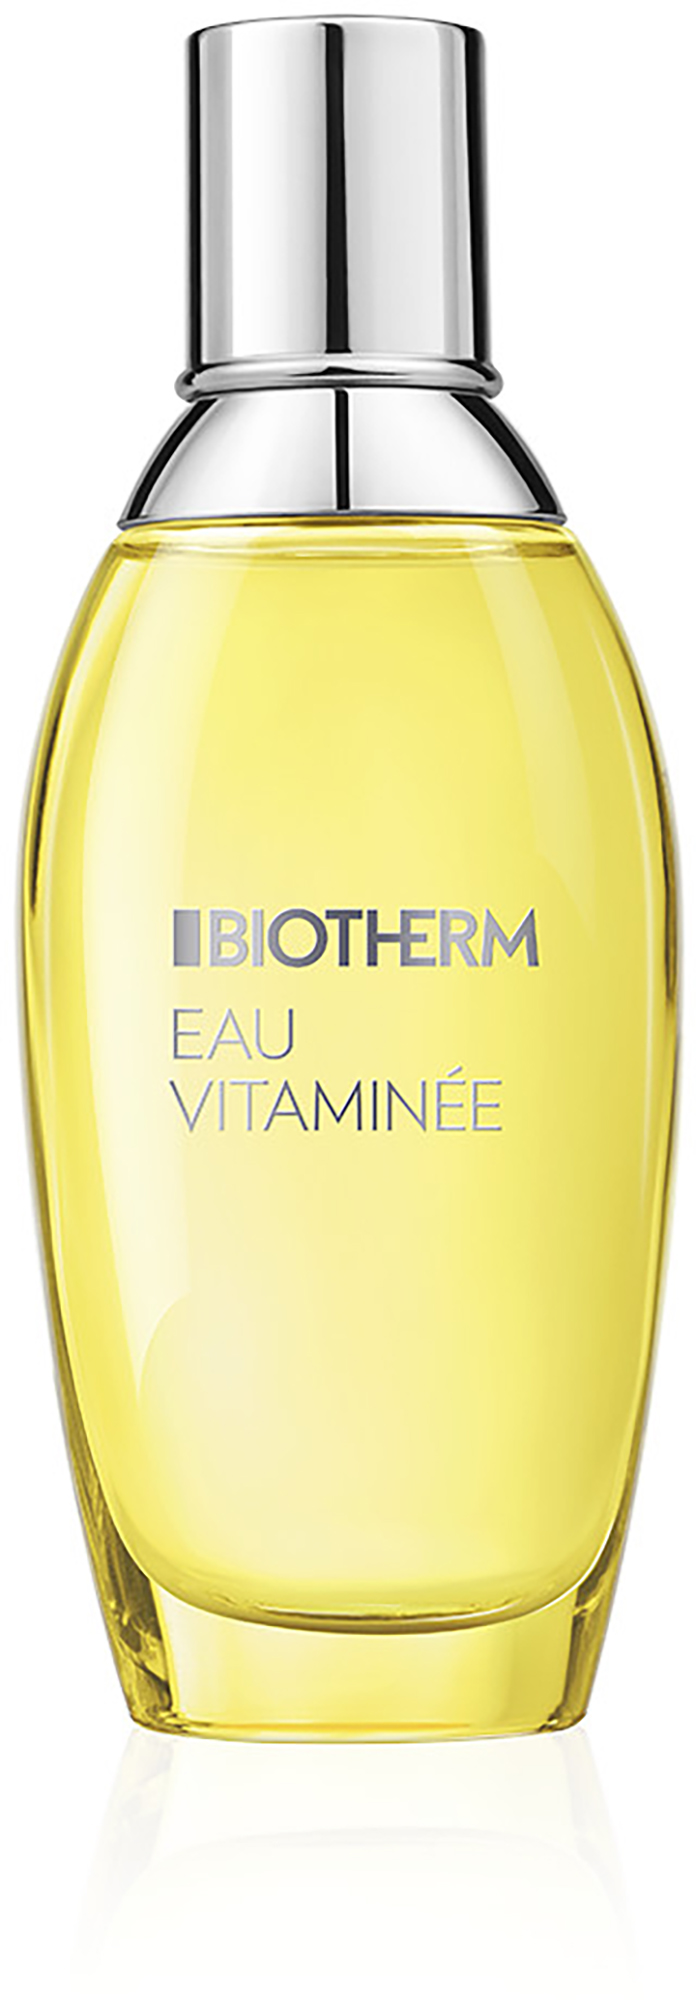 biotherm eau vitaminee woda toaletowa 50 ml   